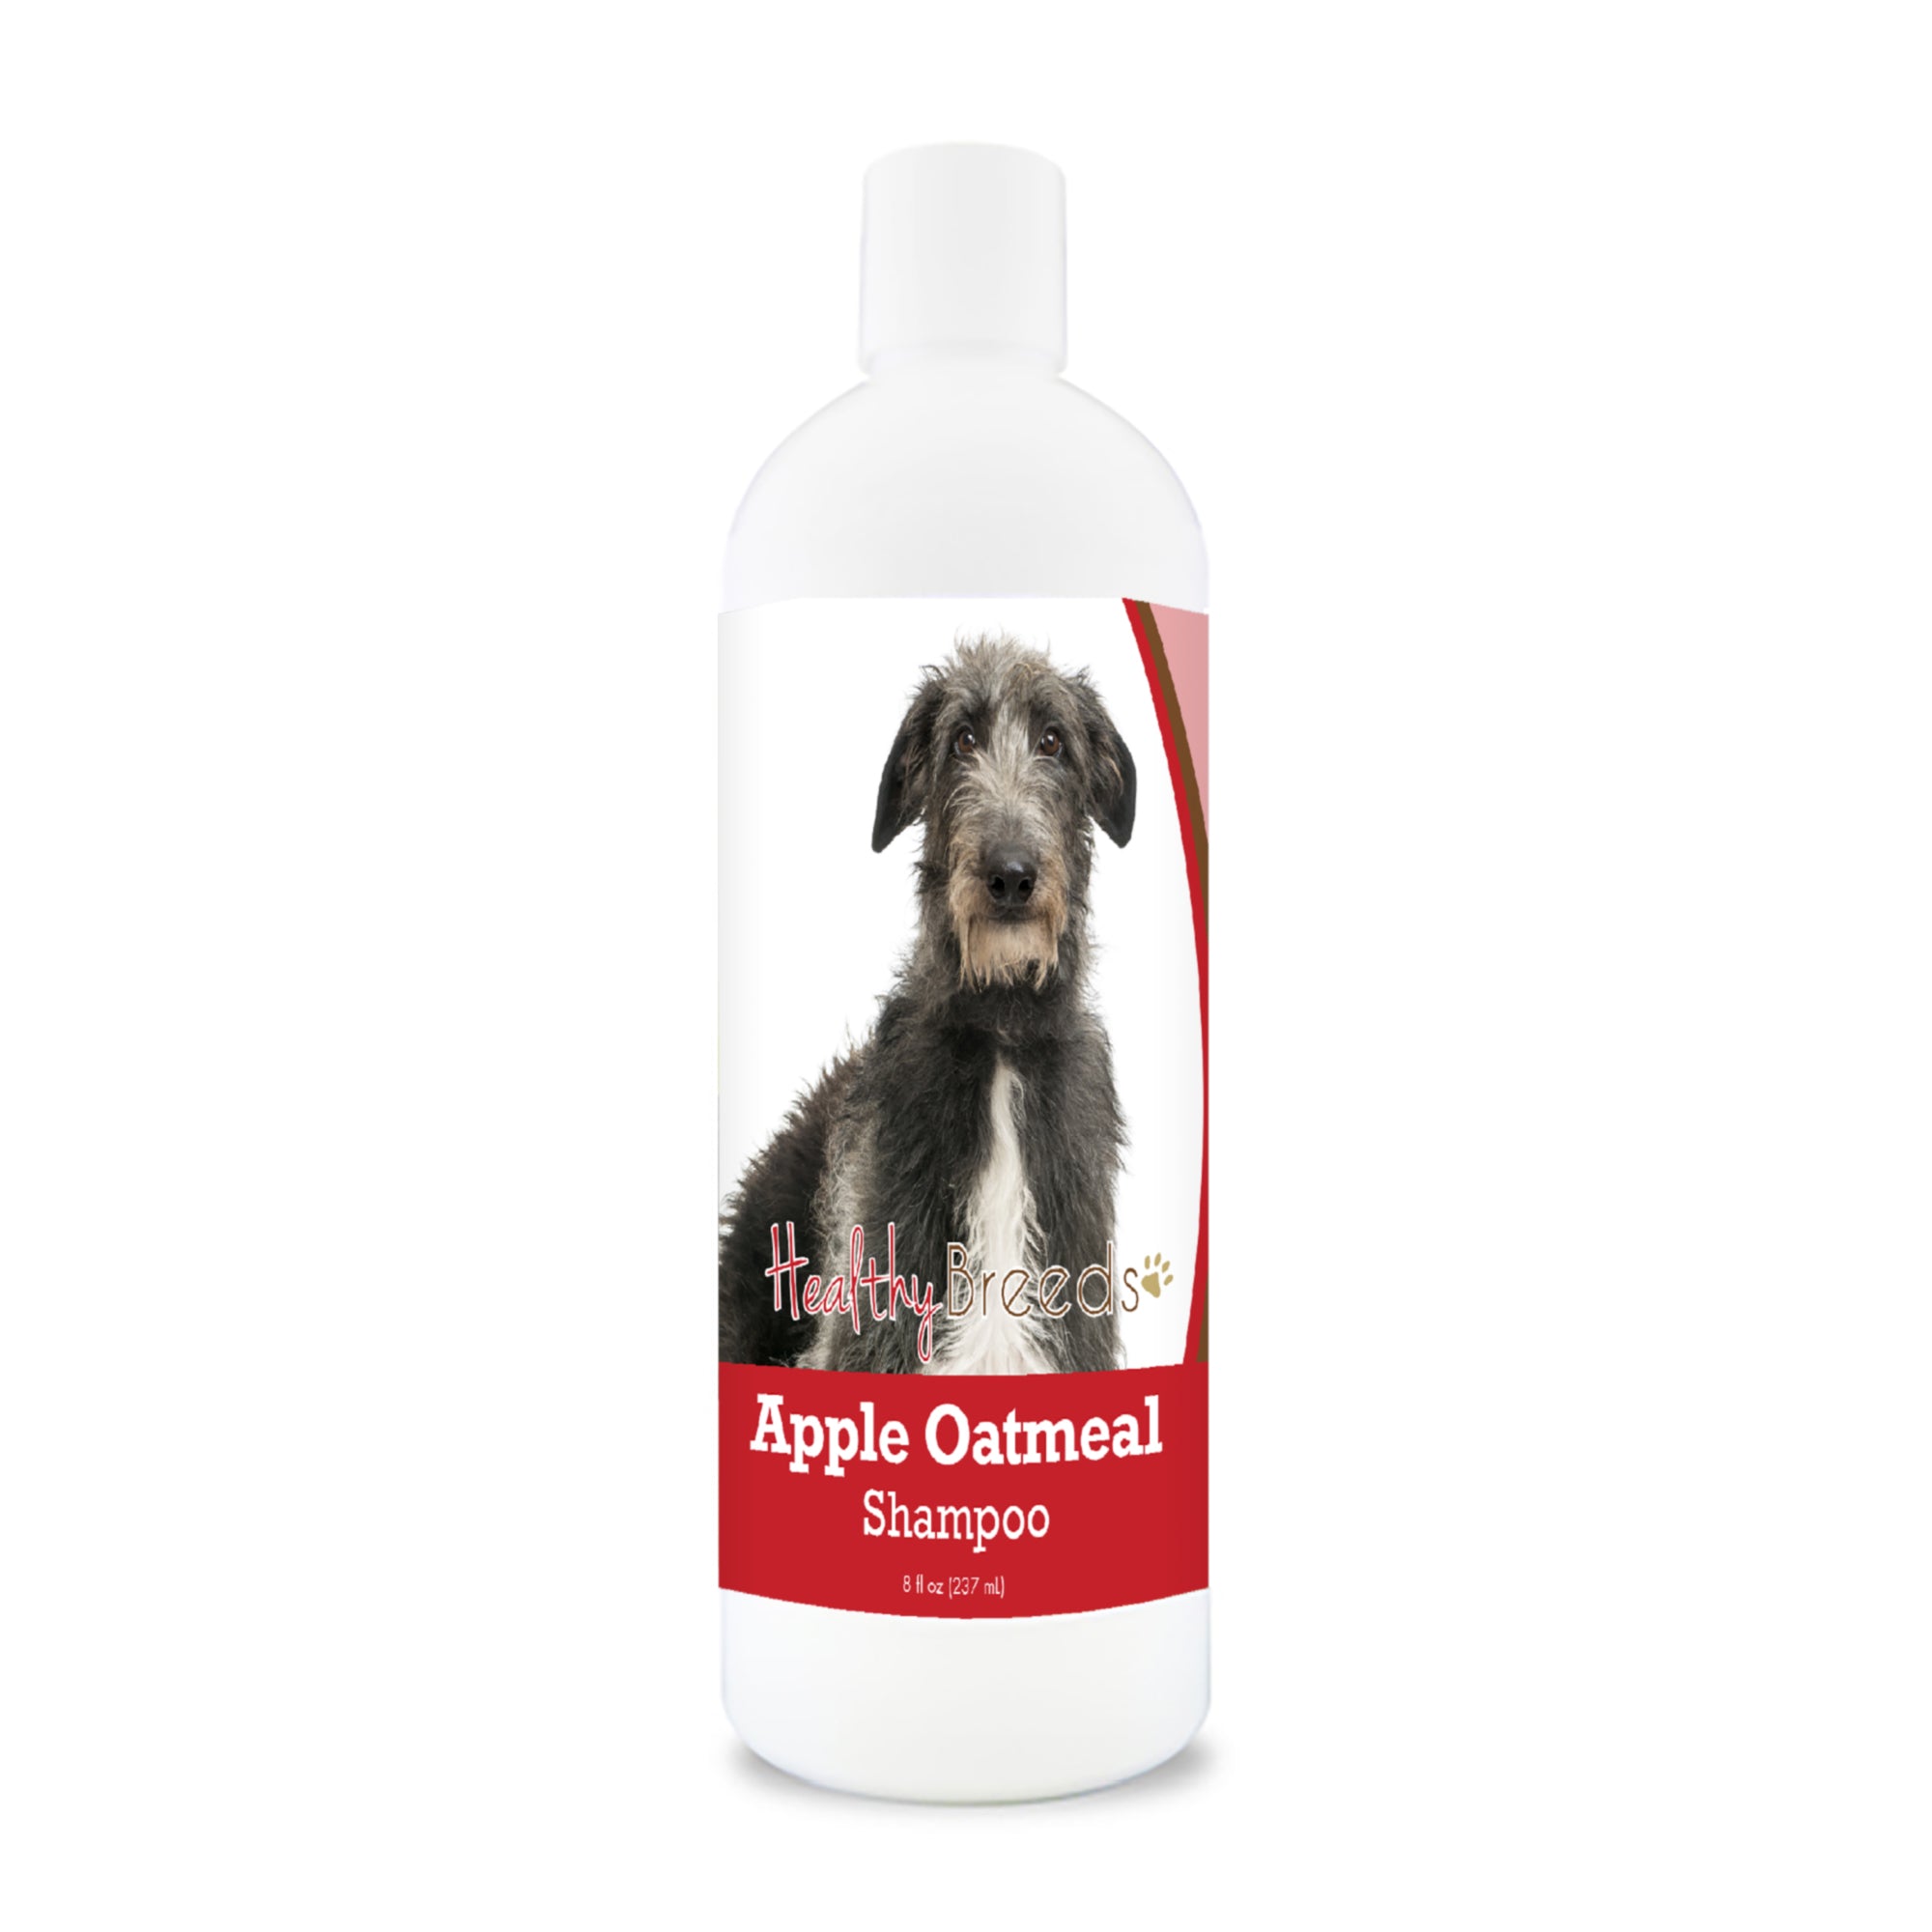 Scottish Deerhound Apple Oatmeal Shampoo 8 oz